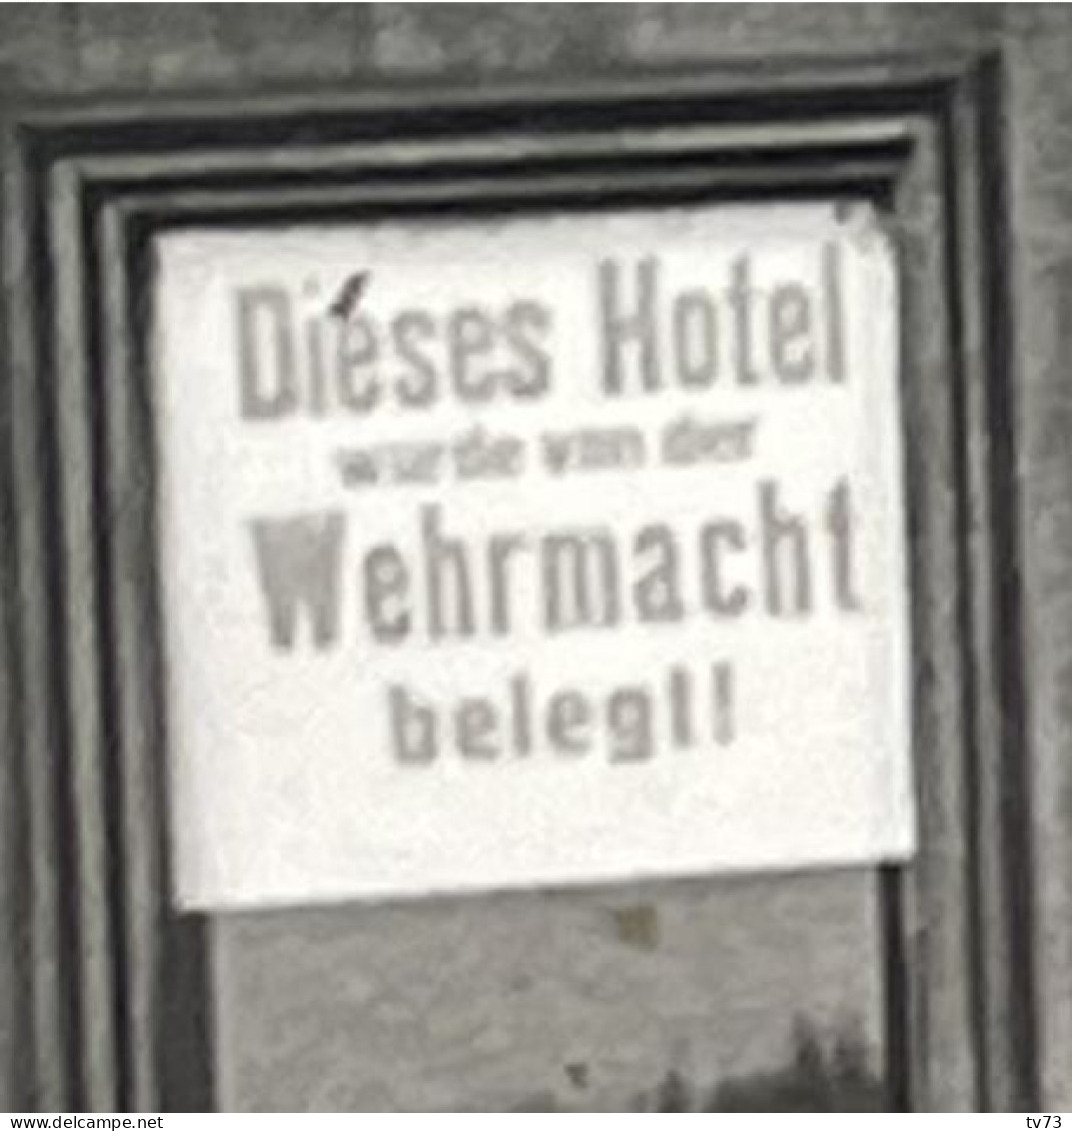 V160E - Rare carte photo - HAIDA Teil Lazarett - annexe hopital militaire Wehrmacht Café Restaurant Hotel